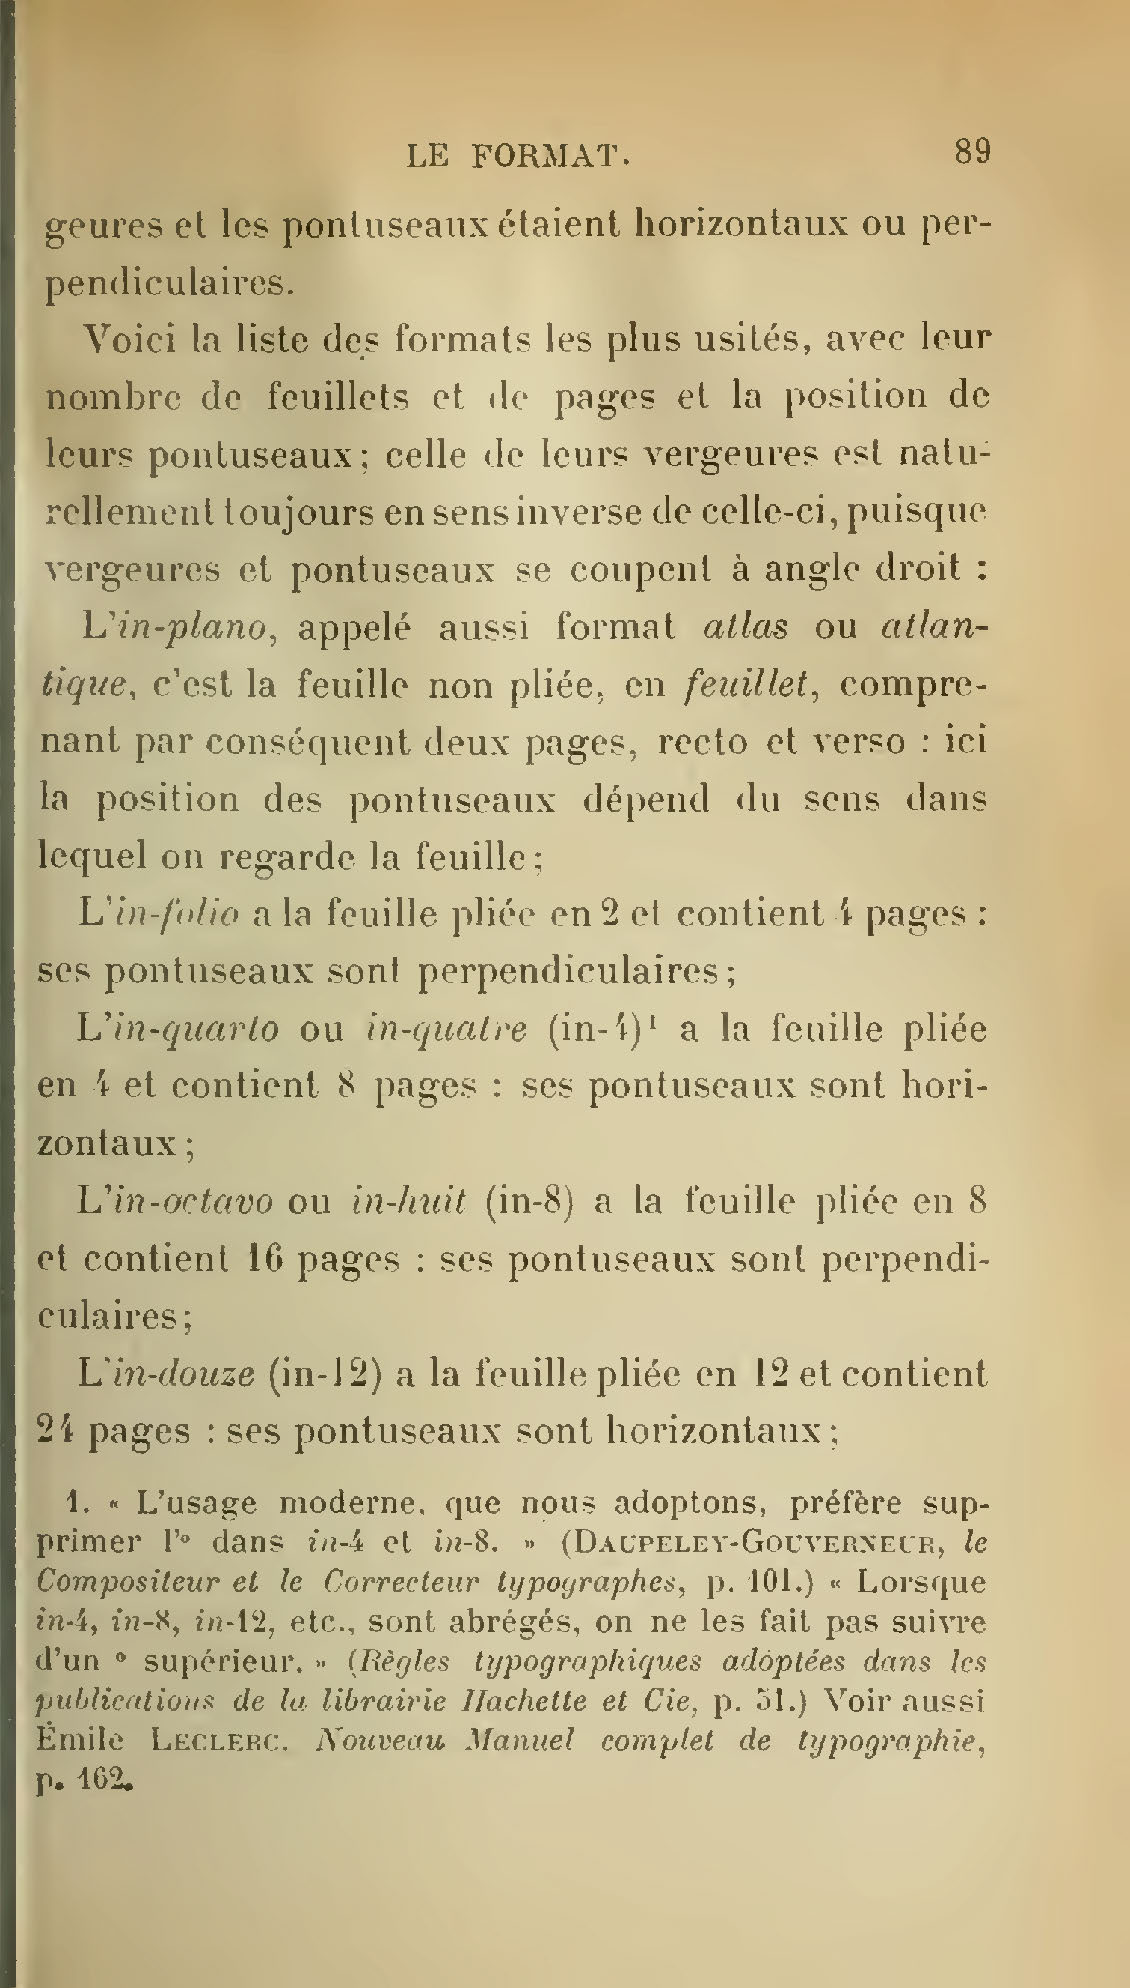 Albert Cim, Le Livre, t. III, p. 89.